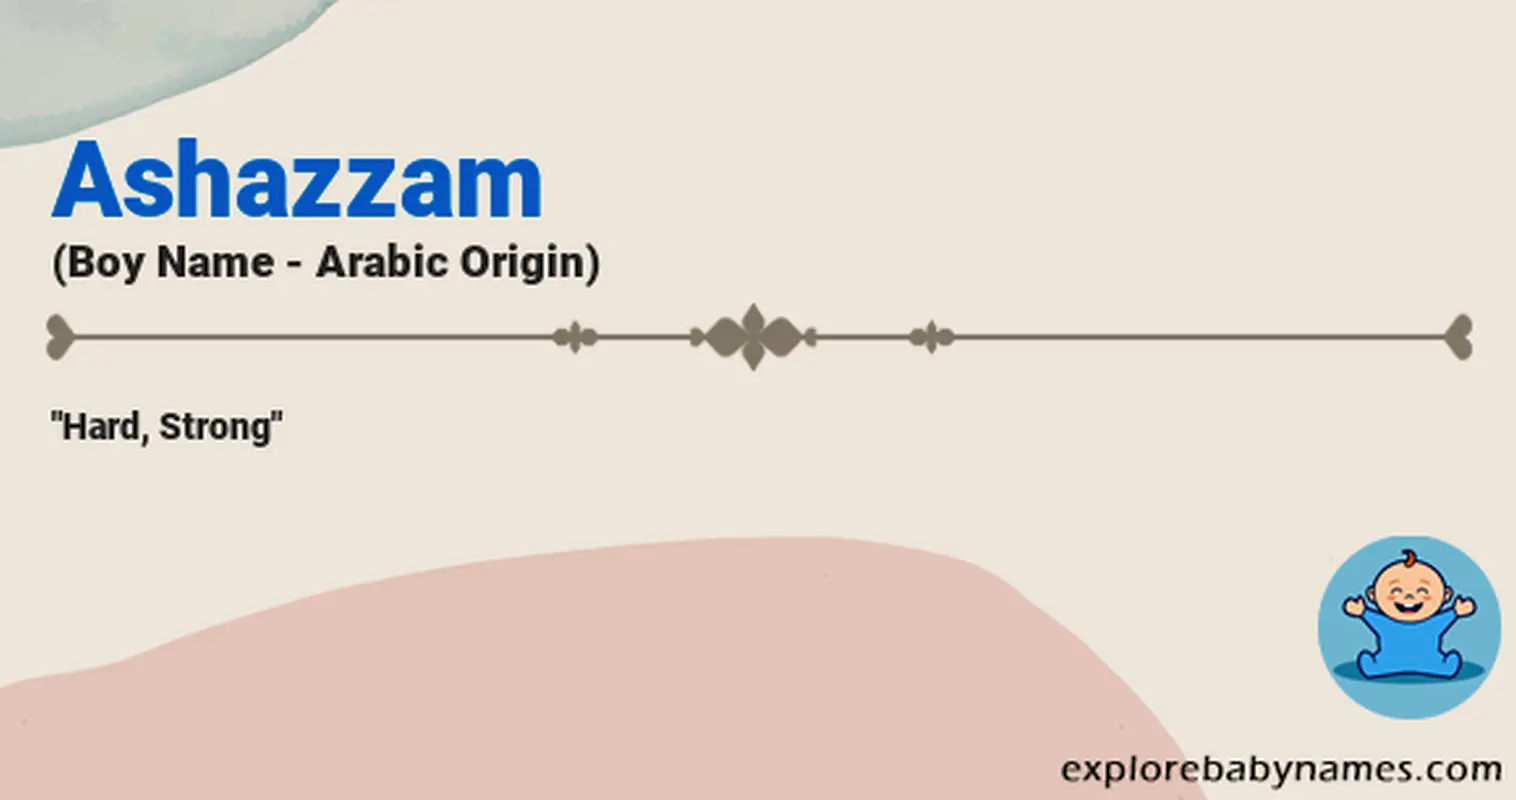 Meaning of Ashazzam